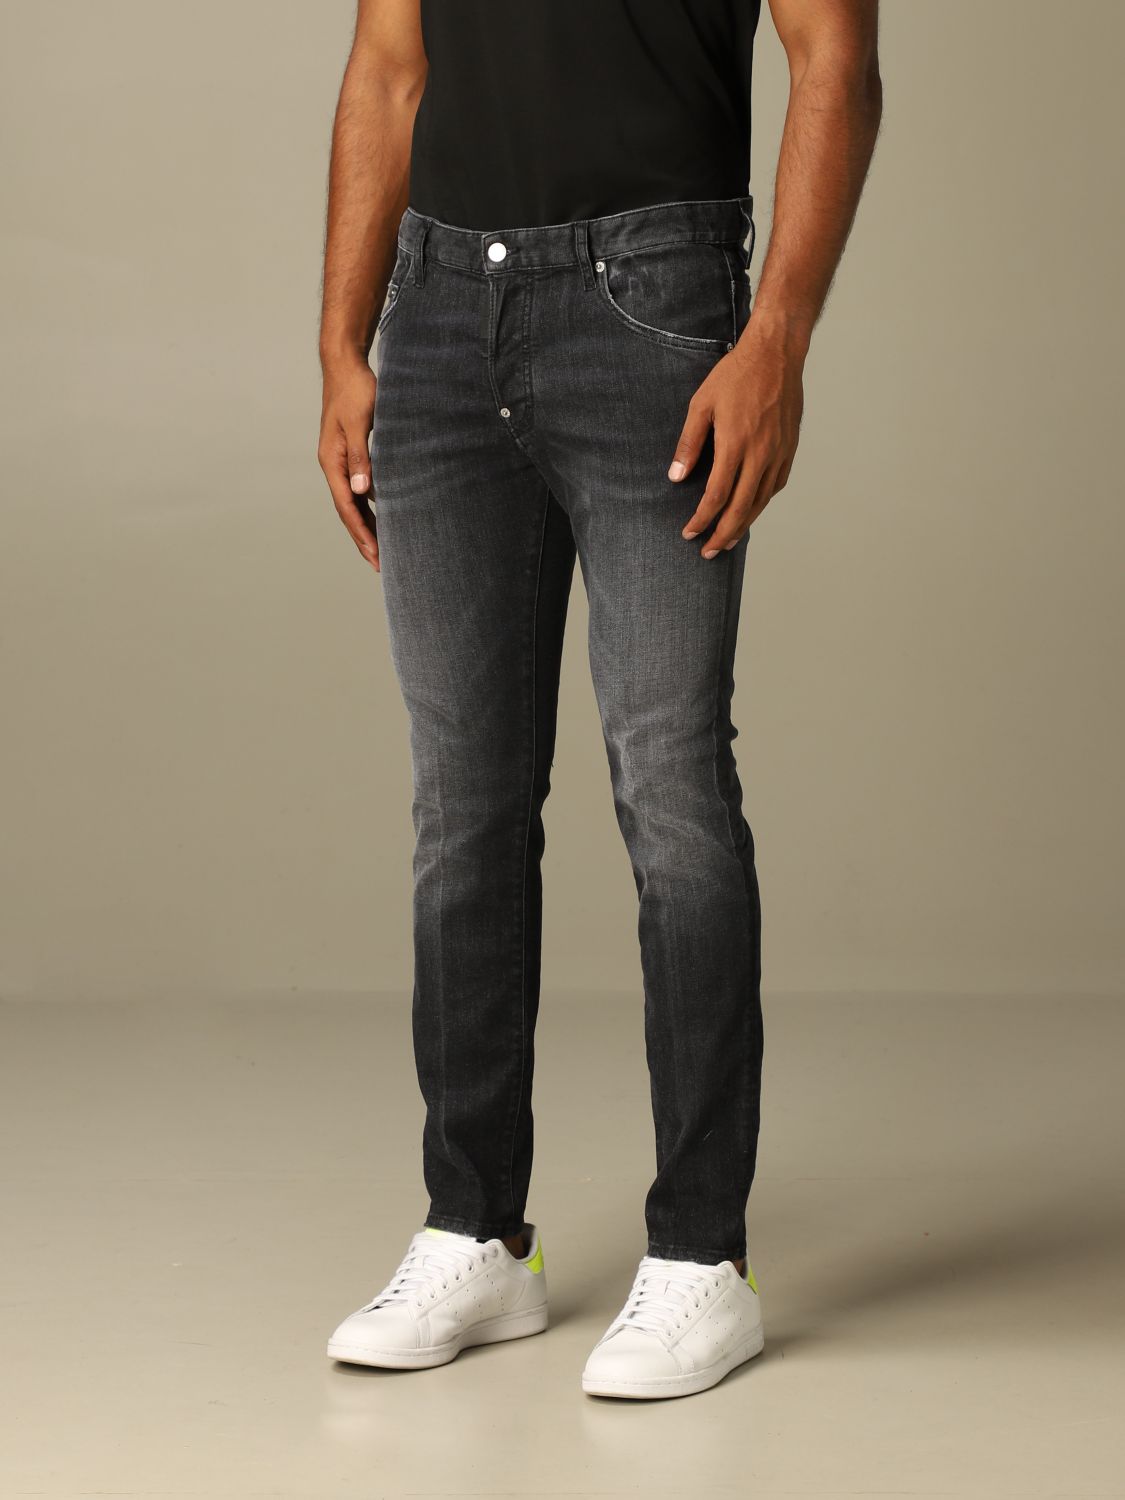 dsquared jeans black label